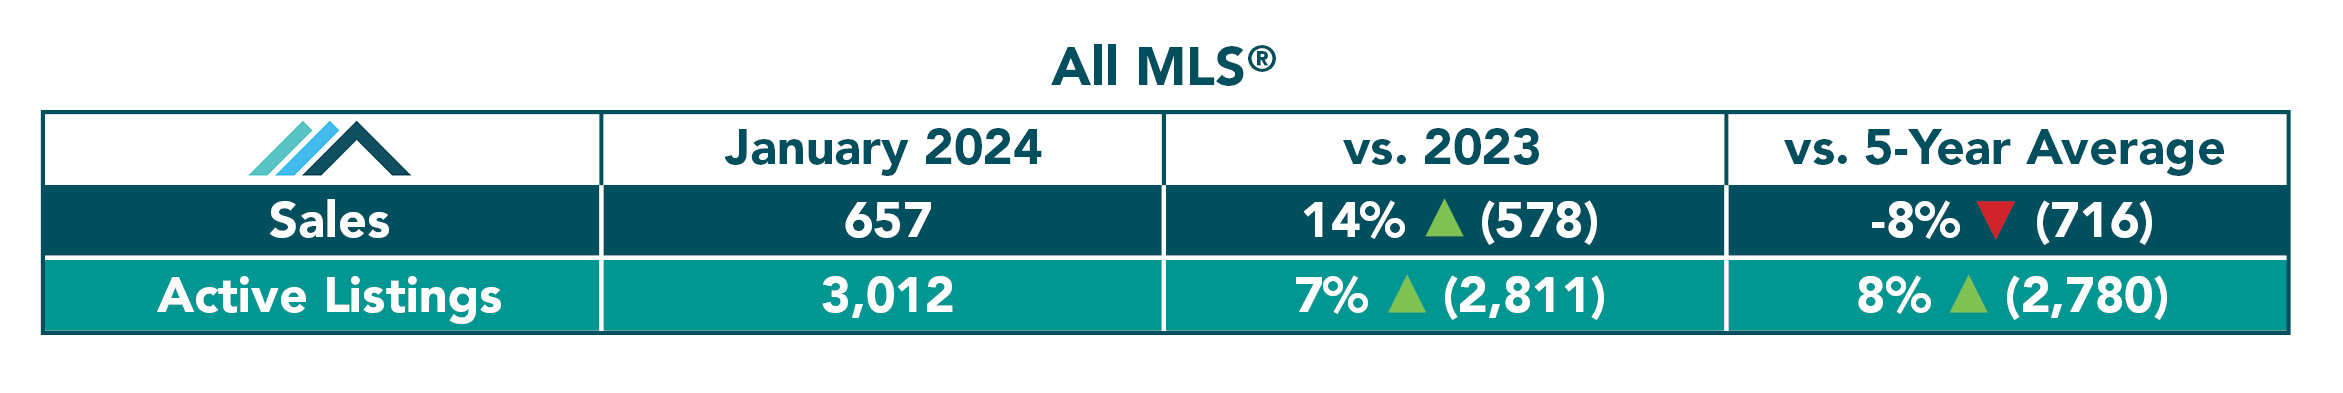 All MLS Table January 2024.jpg (304 KB)